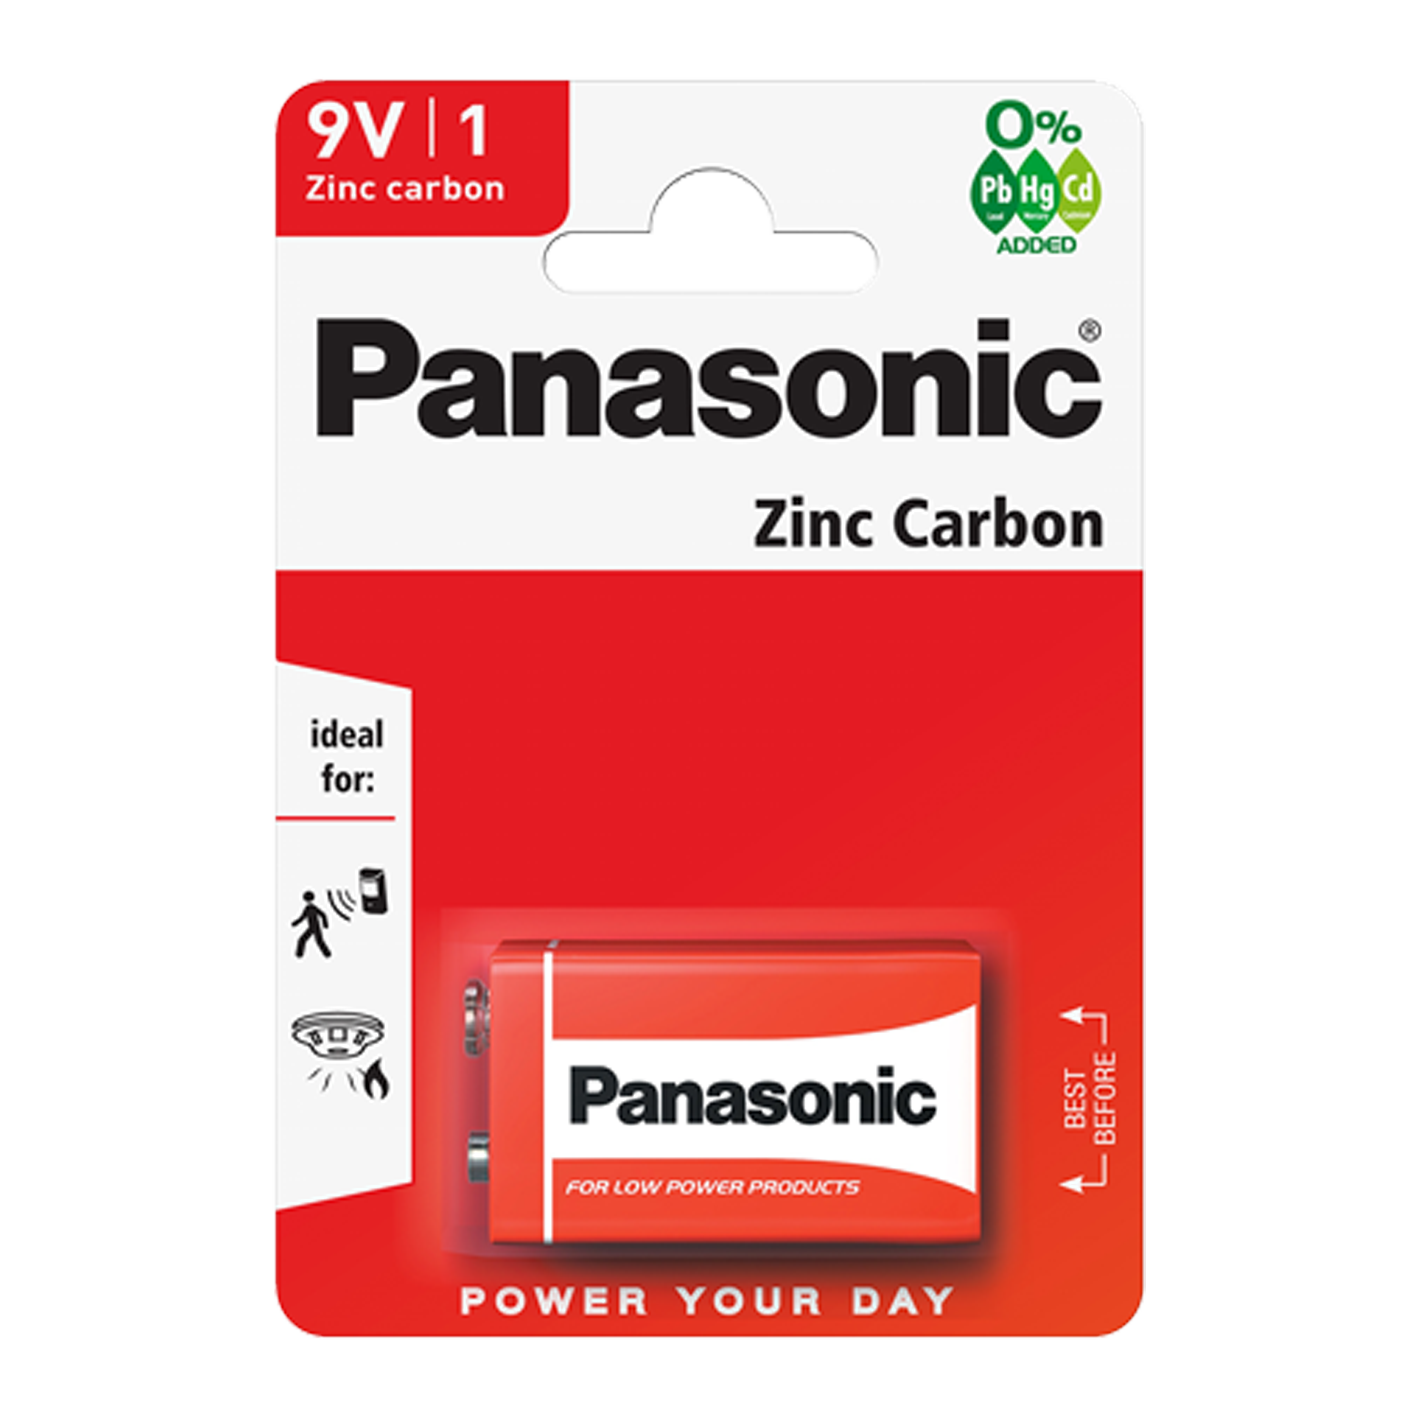 Panasonic Zinc